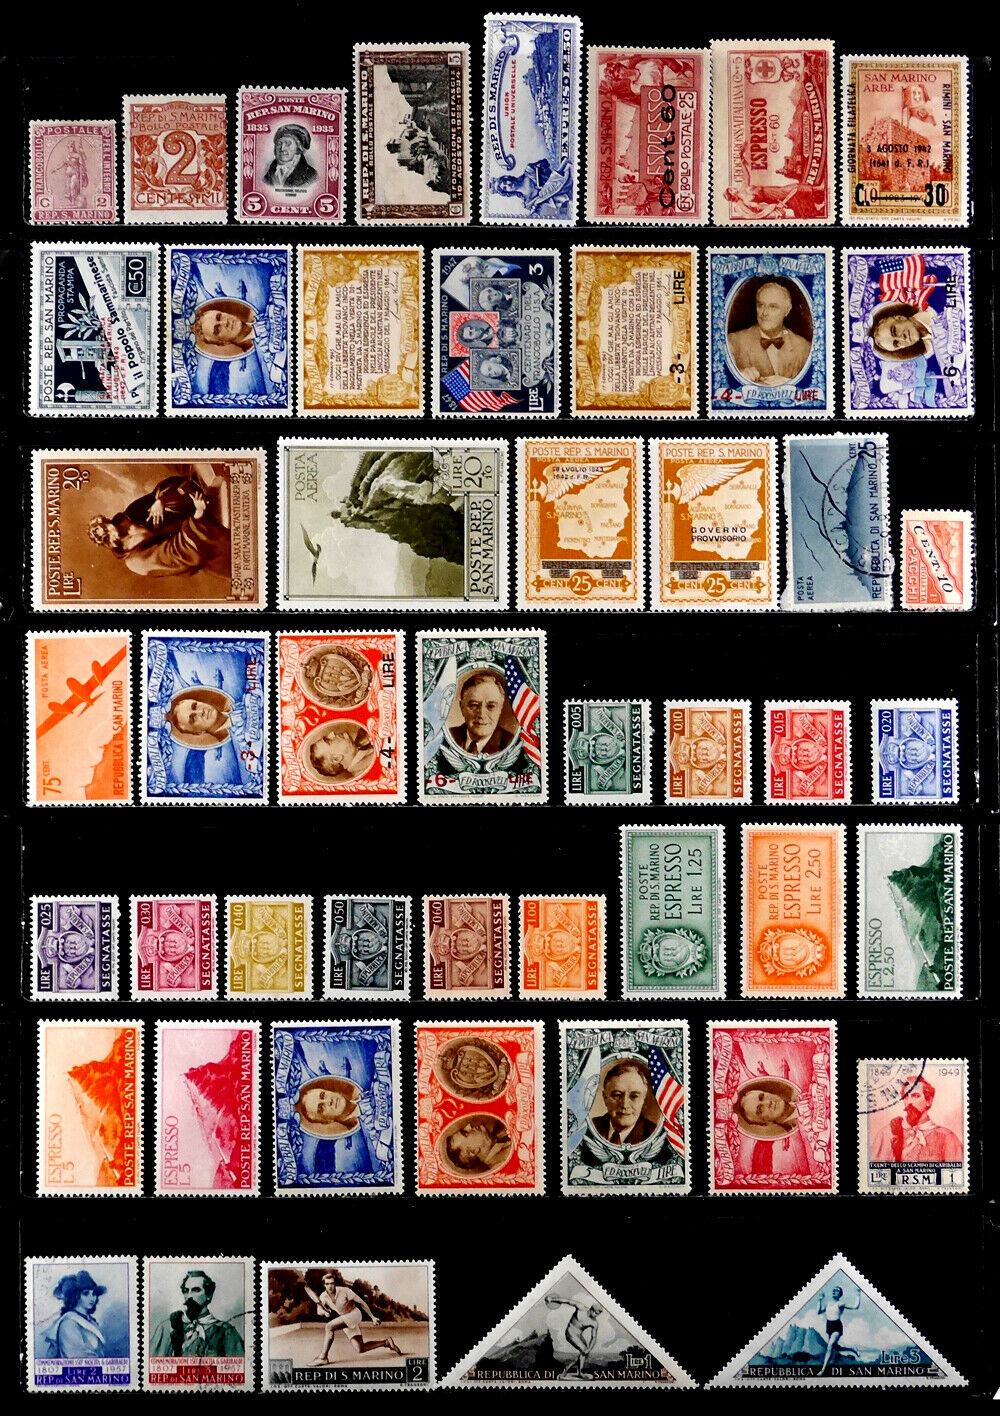 San Marino: Classic Era - 1940's Stamp Collection